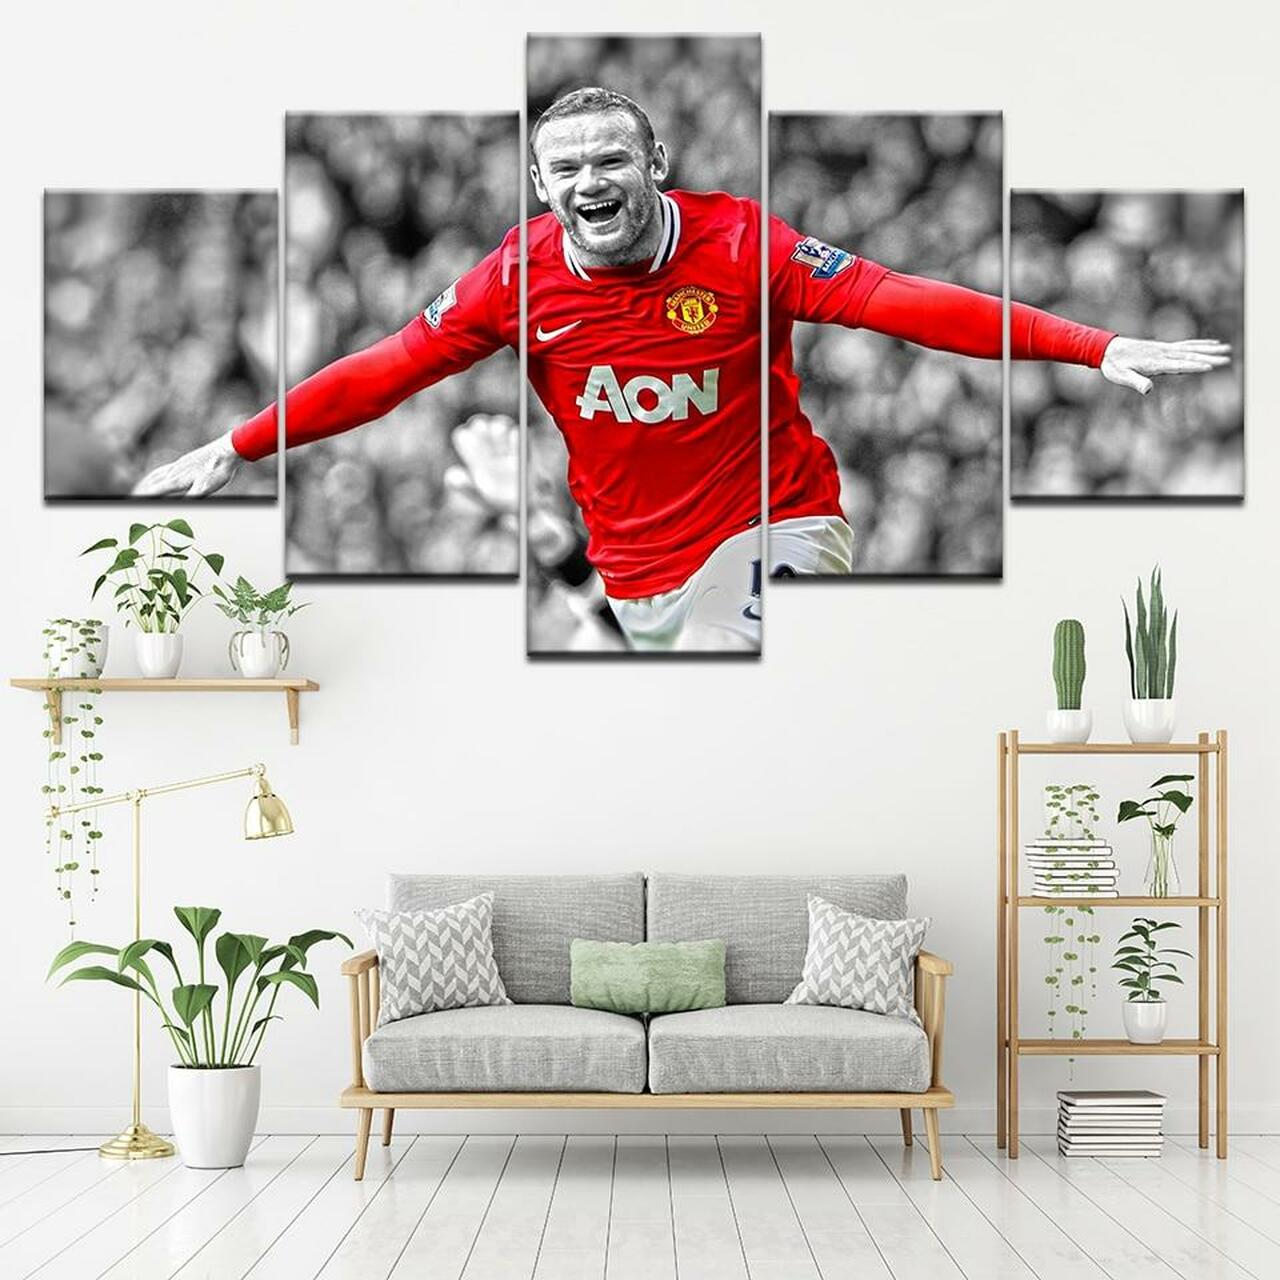 Wayne Rooney Football Star 5 Piece Canvas Art Wall Decor